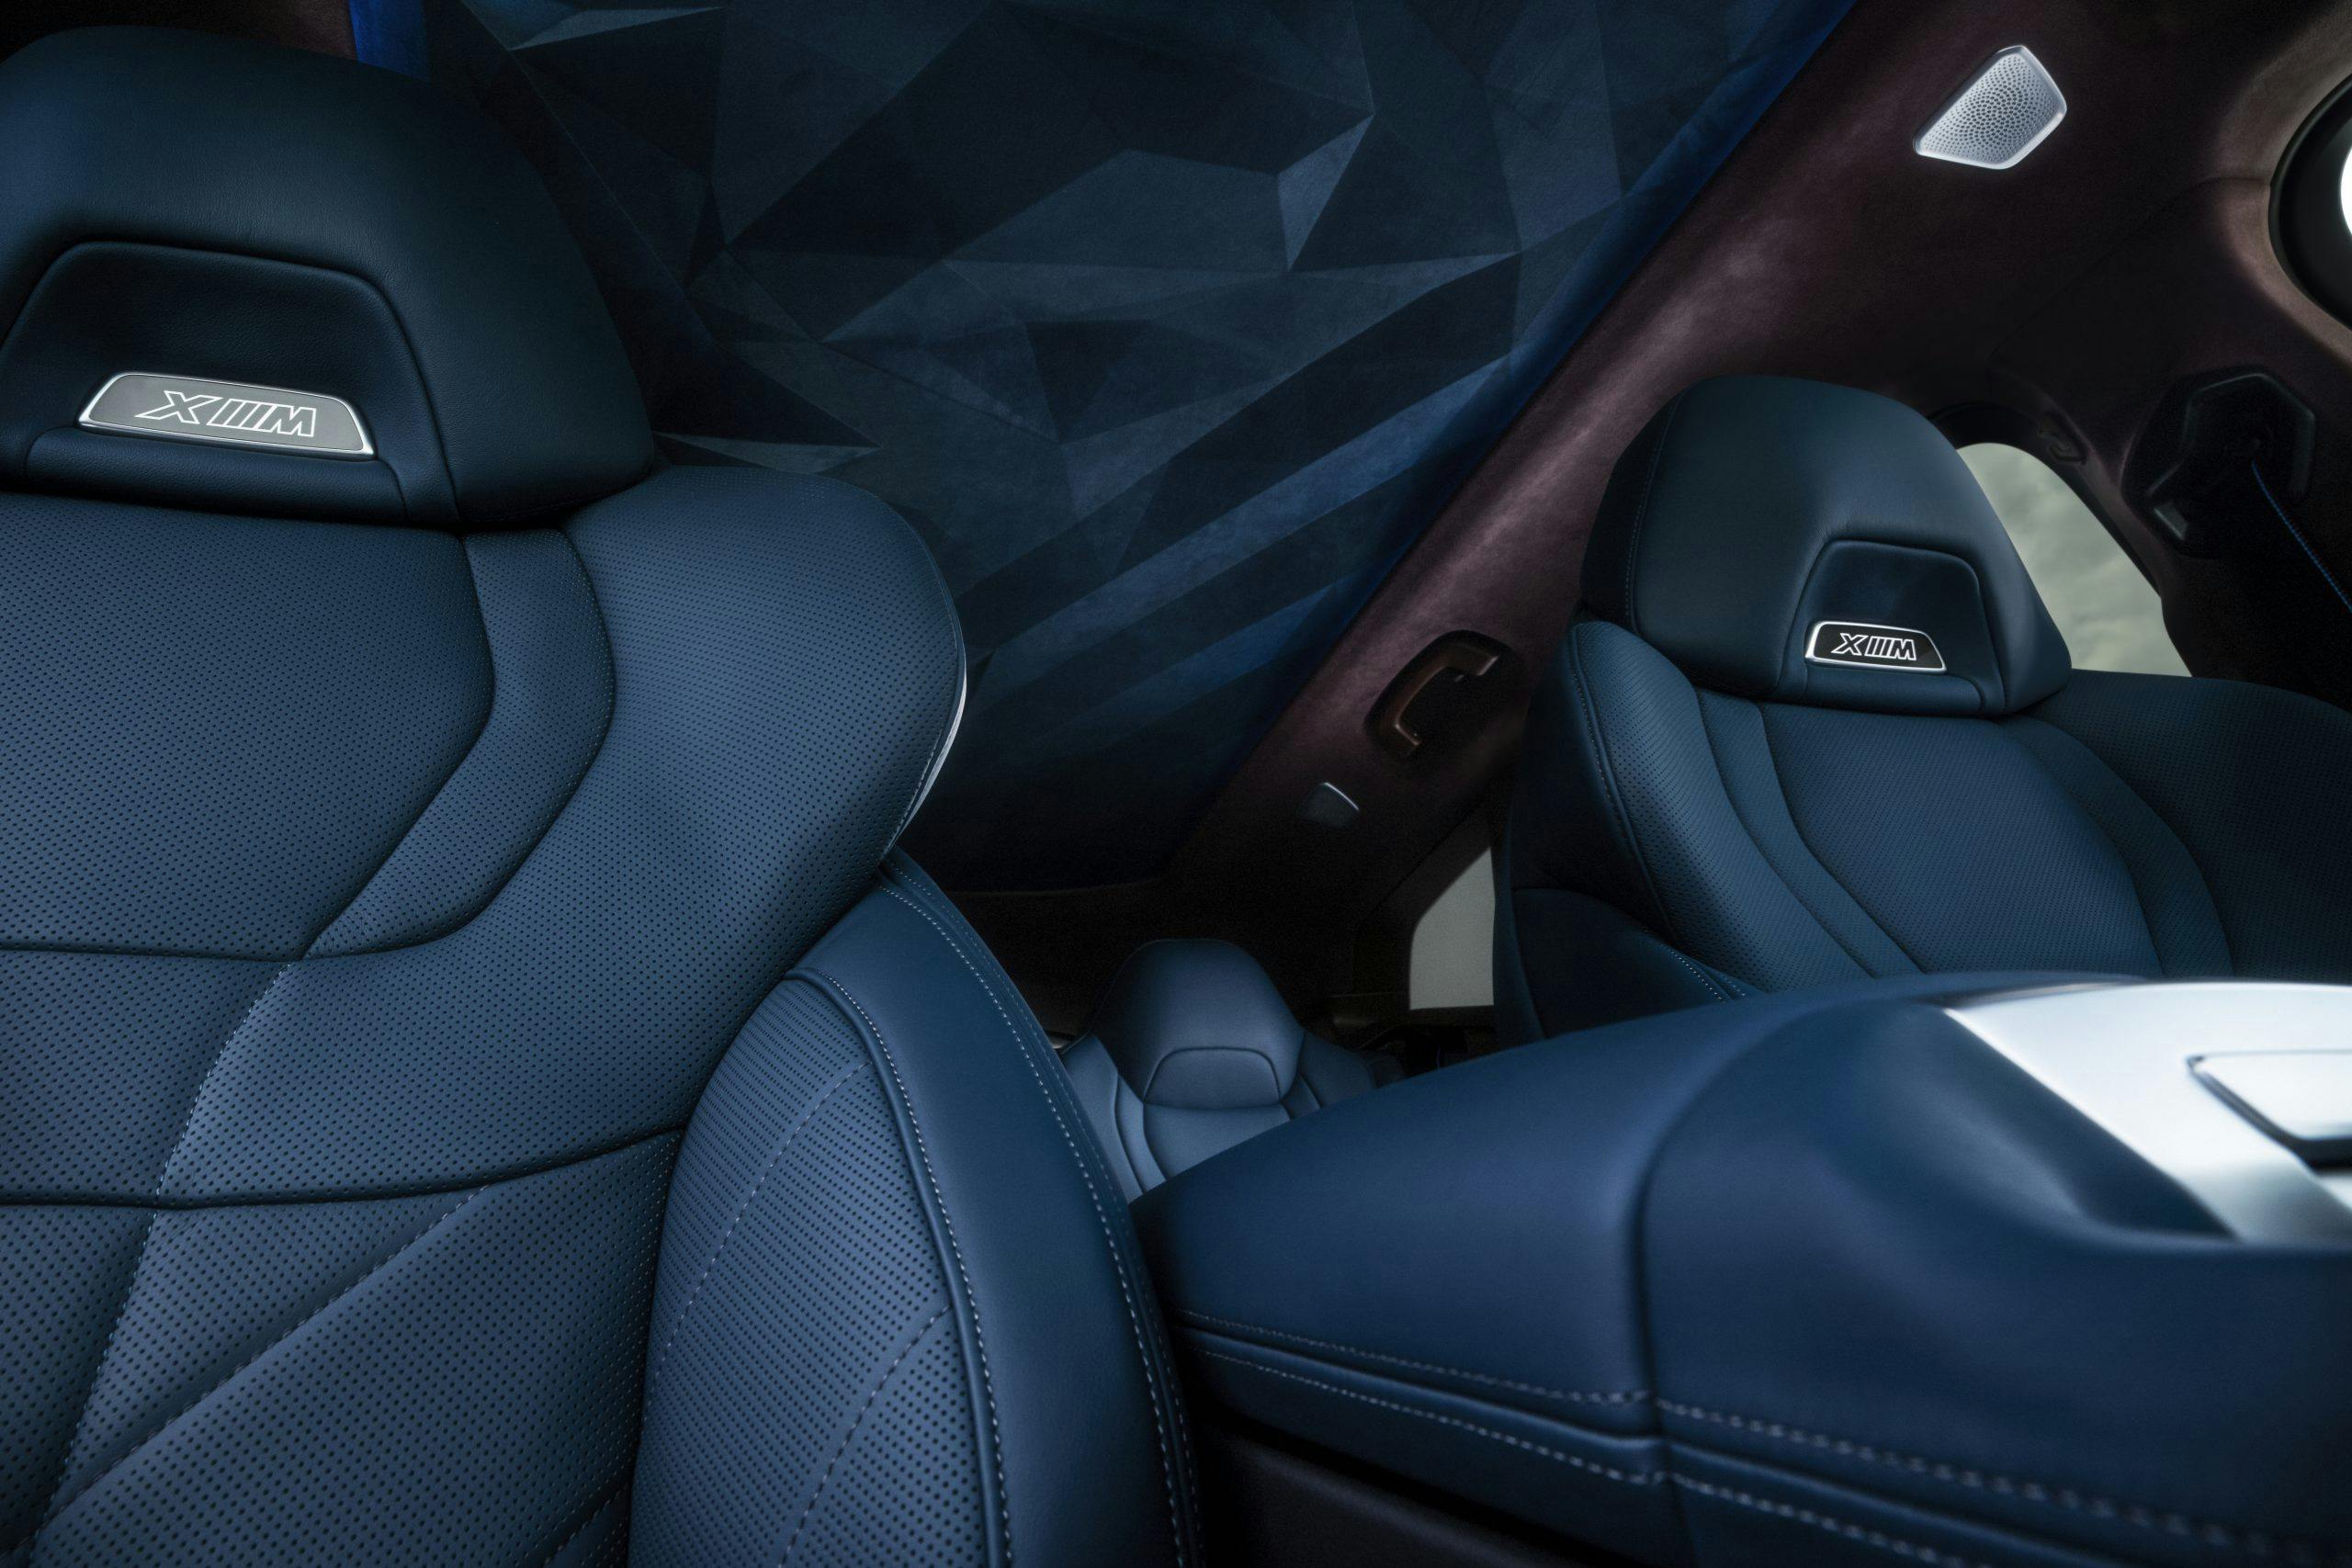 BMW XM SUV interior seat backs